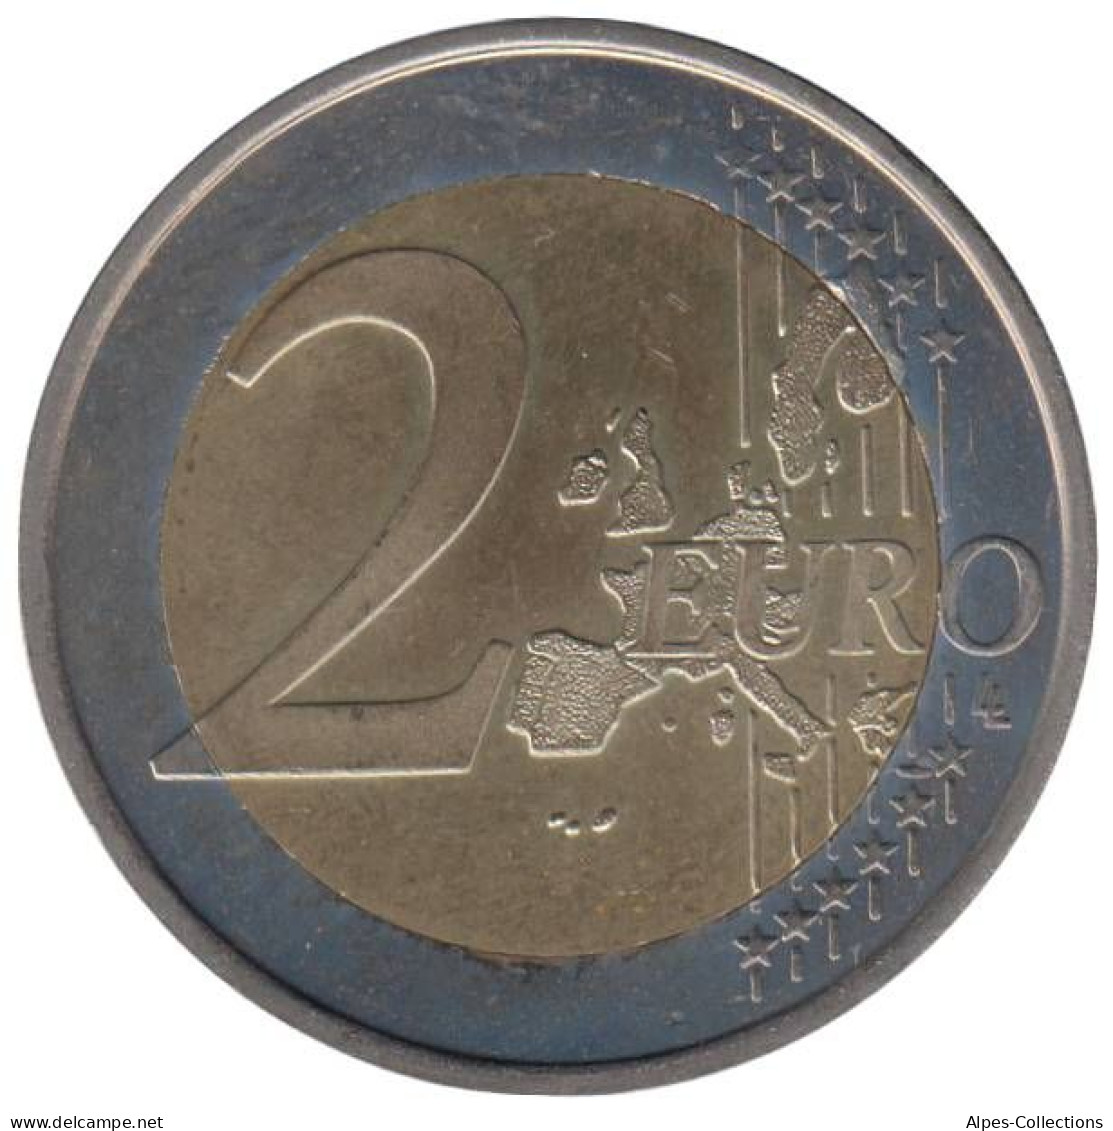 LU20005.2 - LUXEMBOURG - 2 Euros - 2005 - Luxembourg